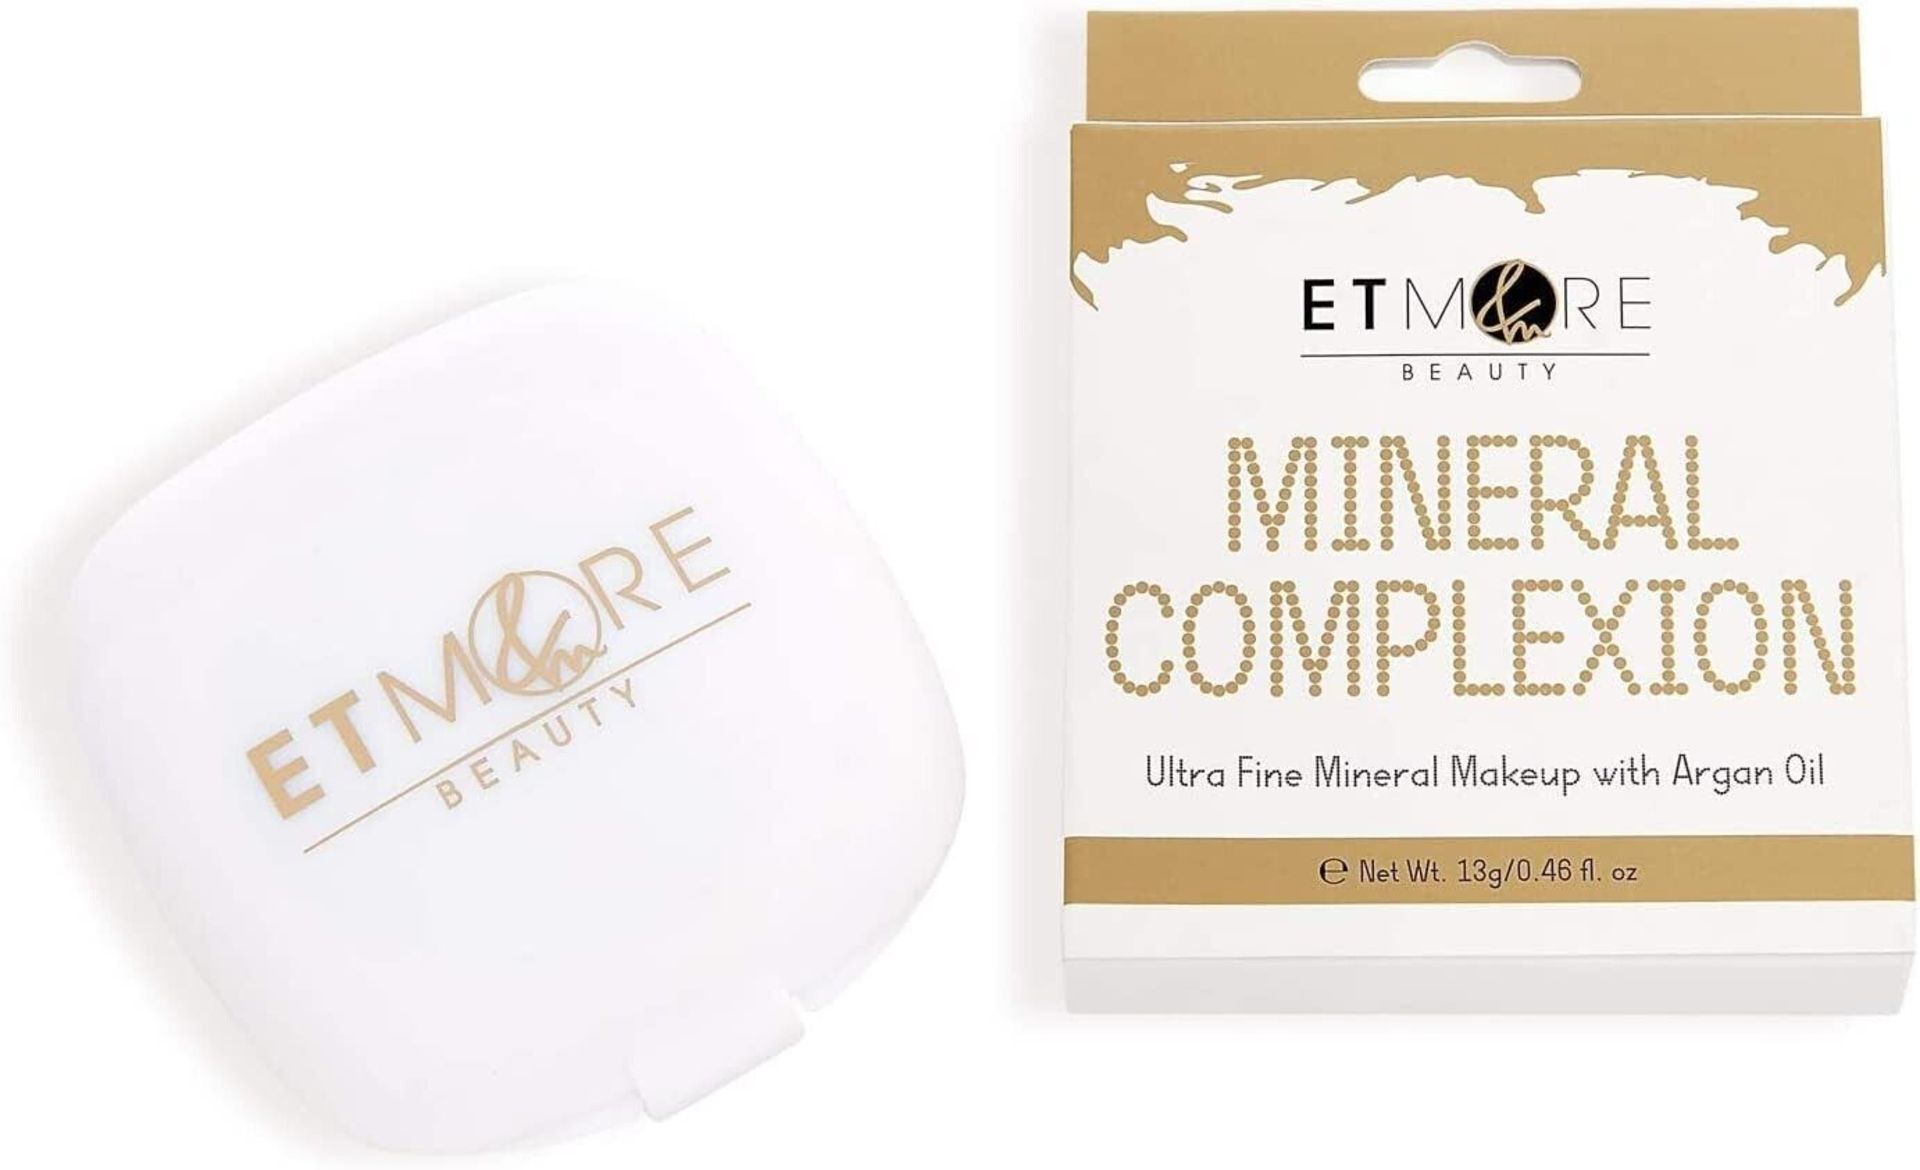 20 x Etmore Beauty – Face Powder Foundation, Mineral Pressed Powder Longwear